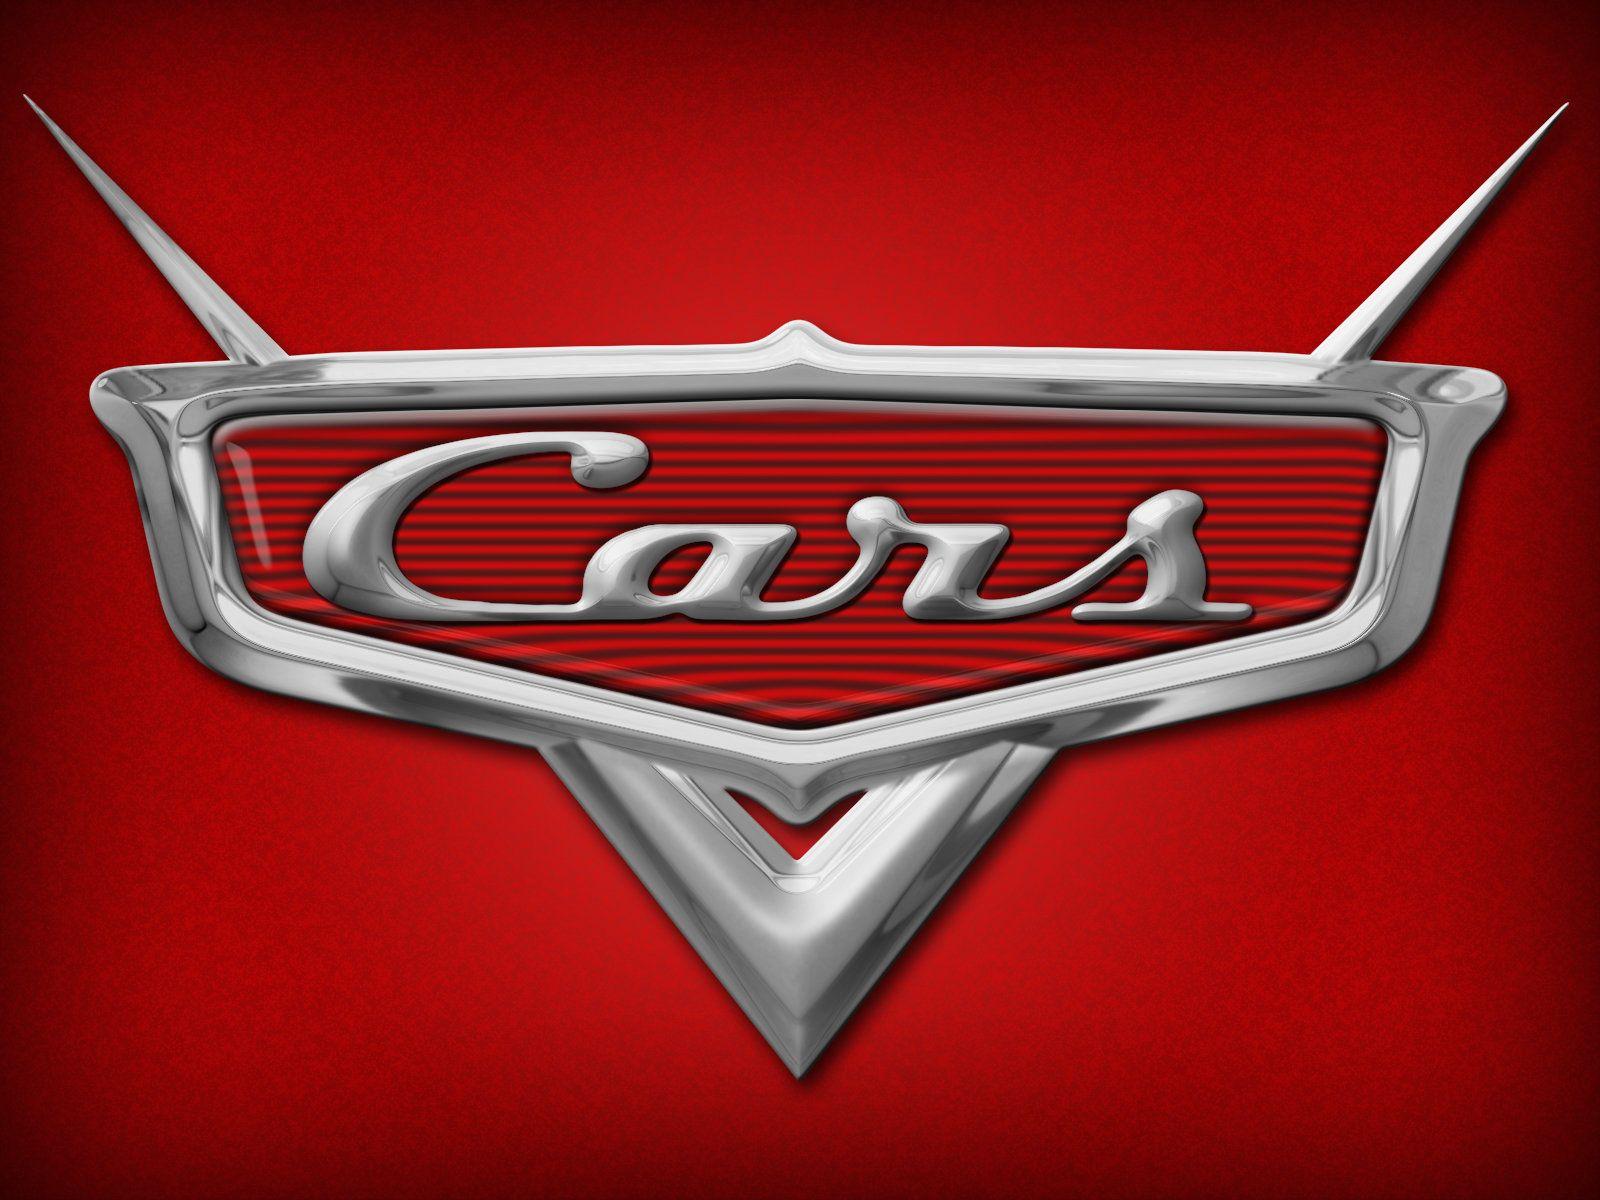 Cars 2 Movie Logo - Cars Logo PSD by vicing on DeviantArt